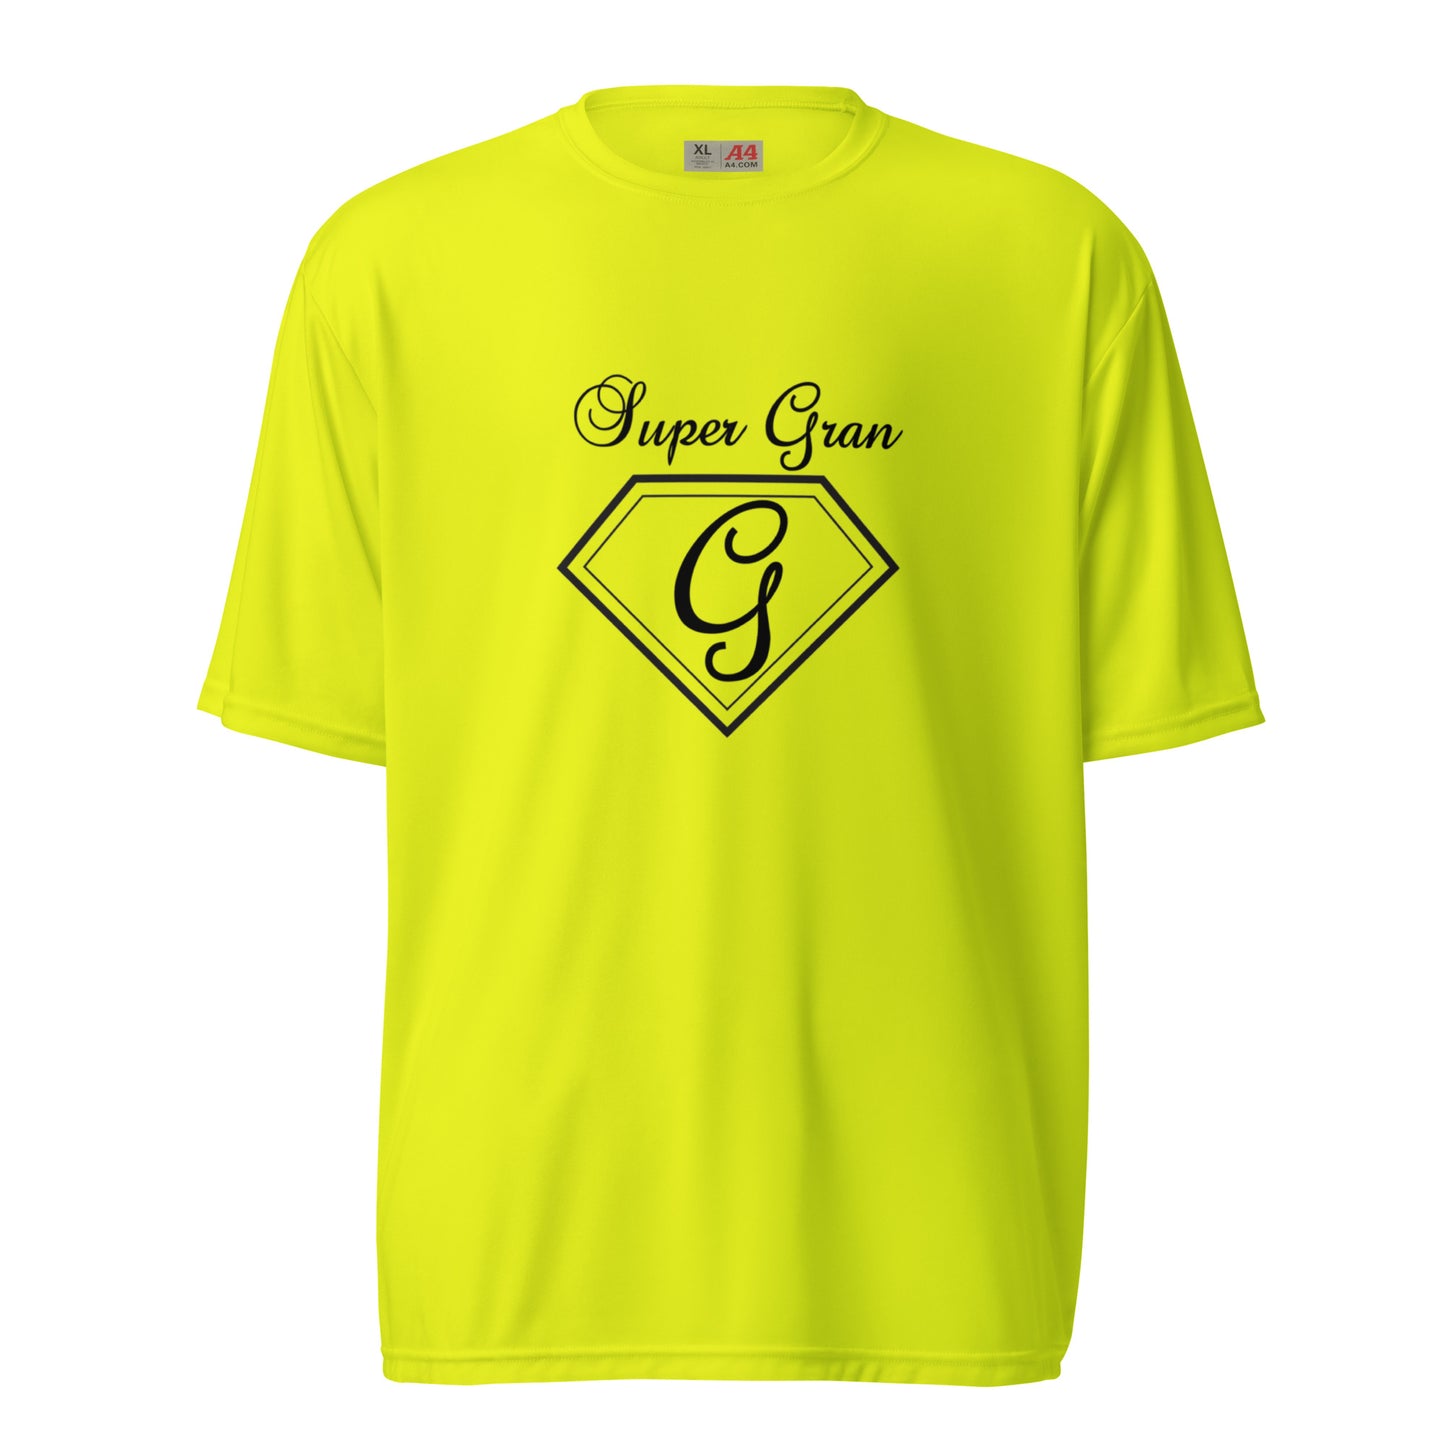 Super Gran unisex performance crew neck t-shirt - Black Print